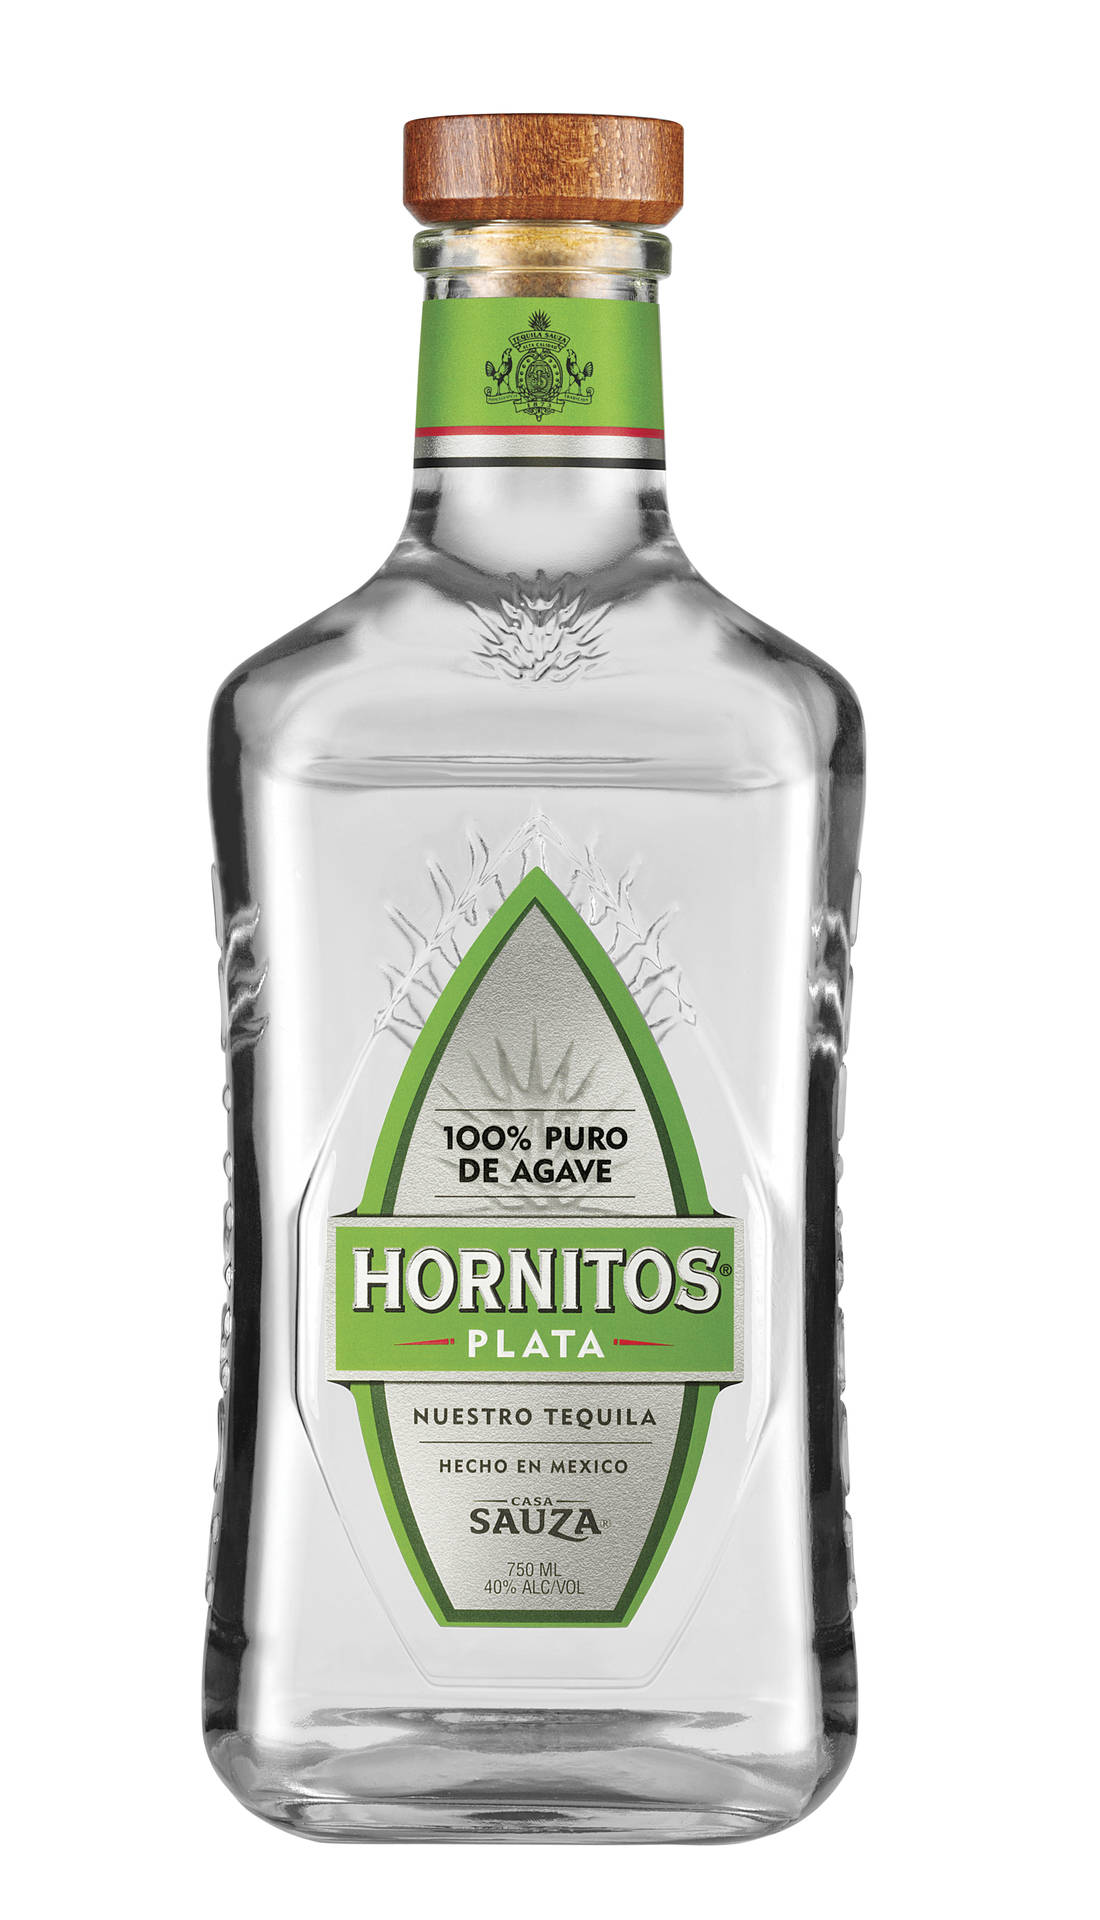 Flaskaav Hornitos Plata Sauza Tequila. Wallpaper